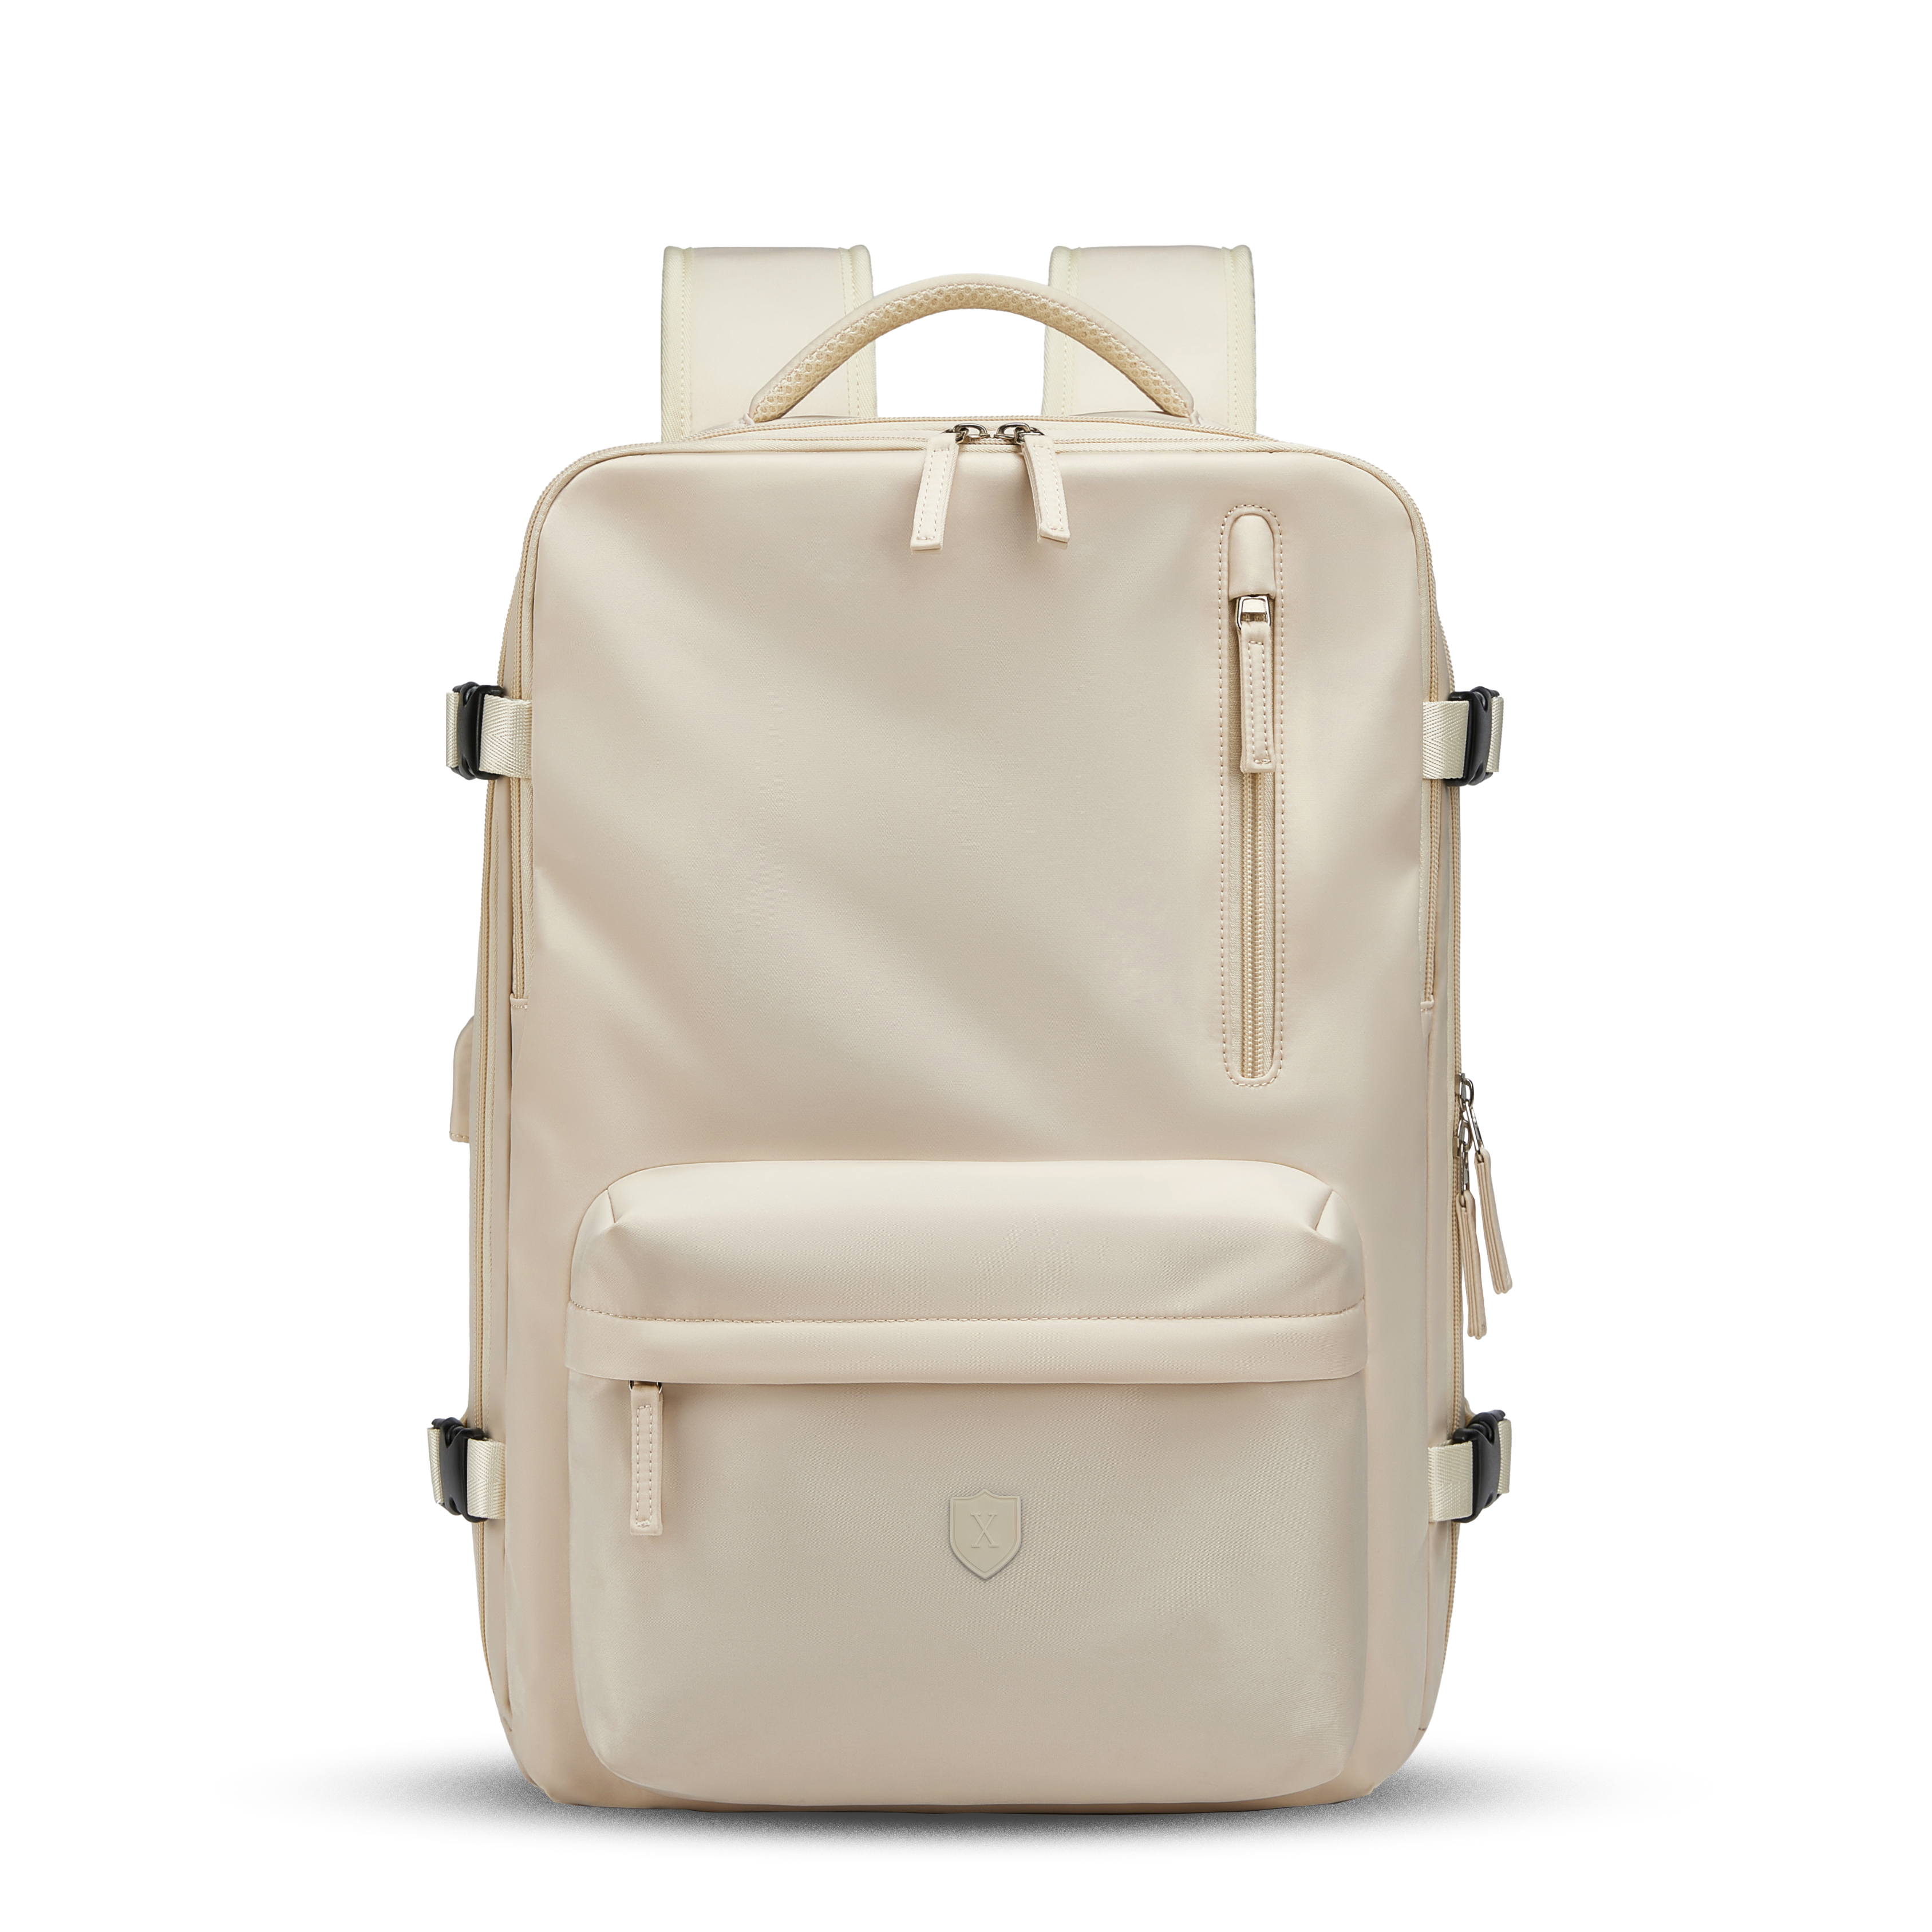 Mochila Xclusive Royal Backpack Blanca expandible desde el frente